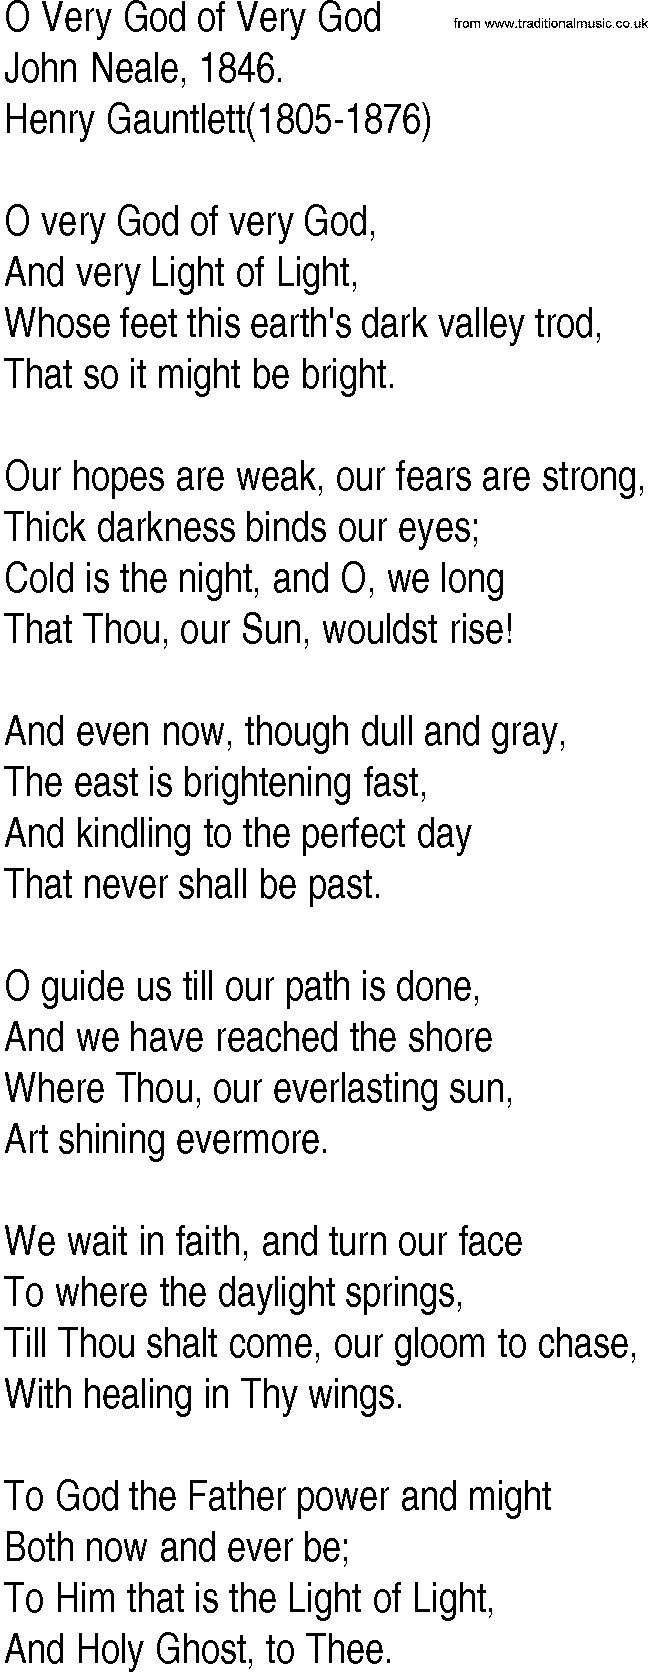 Hymn and Gospel Song: O Very God of Very God by John Neale lyrics